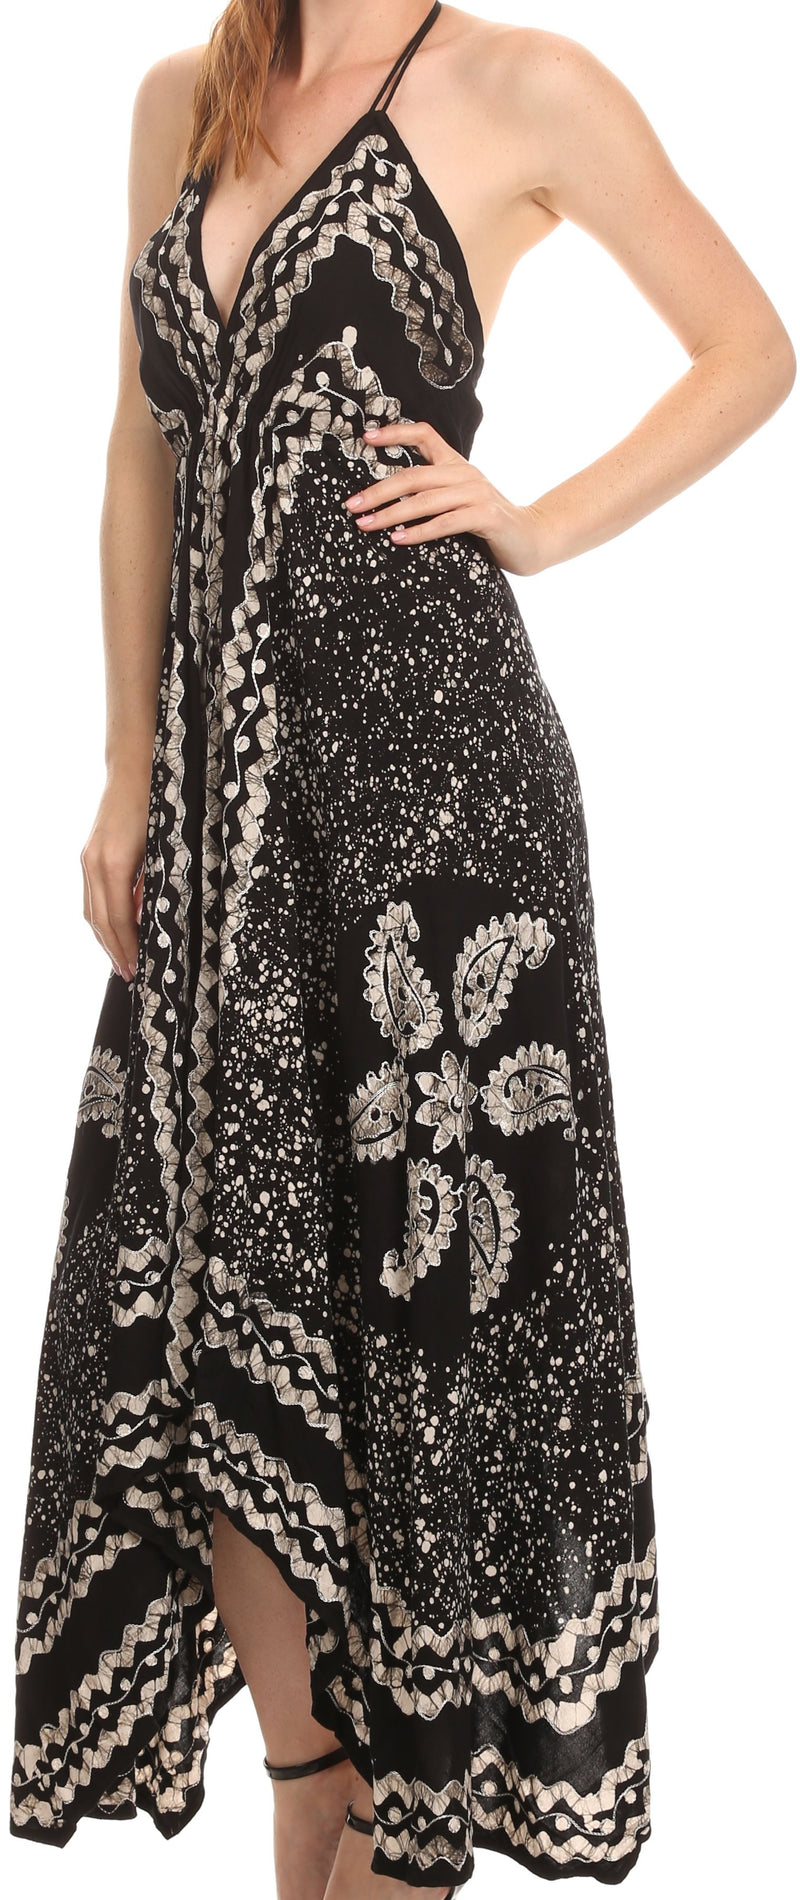 Sakkas Aleayma Strapless Long Adjustable Bead Embroidered Dyed Halter Top Dress